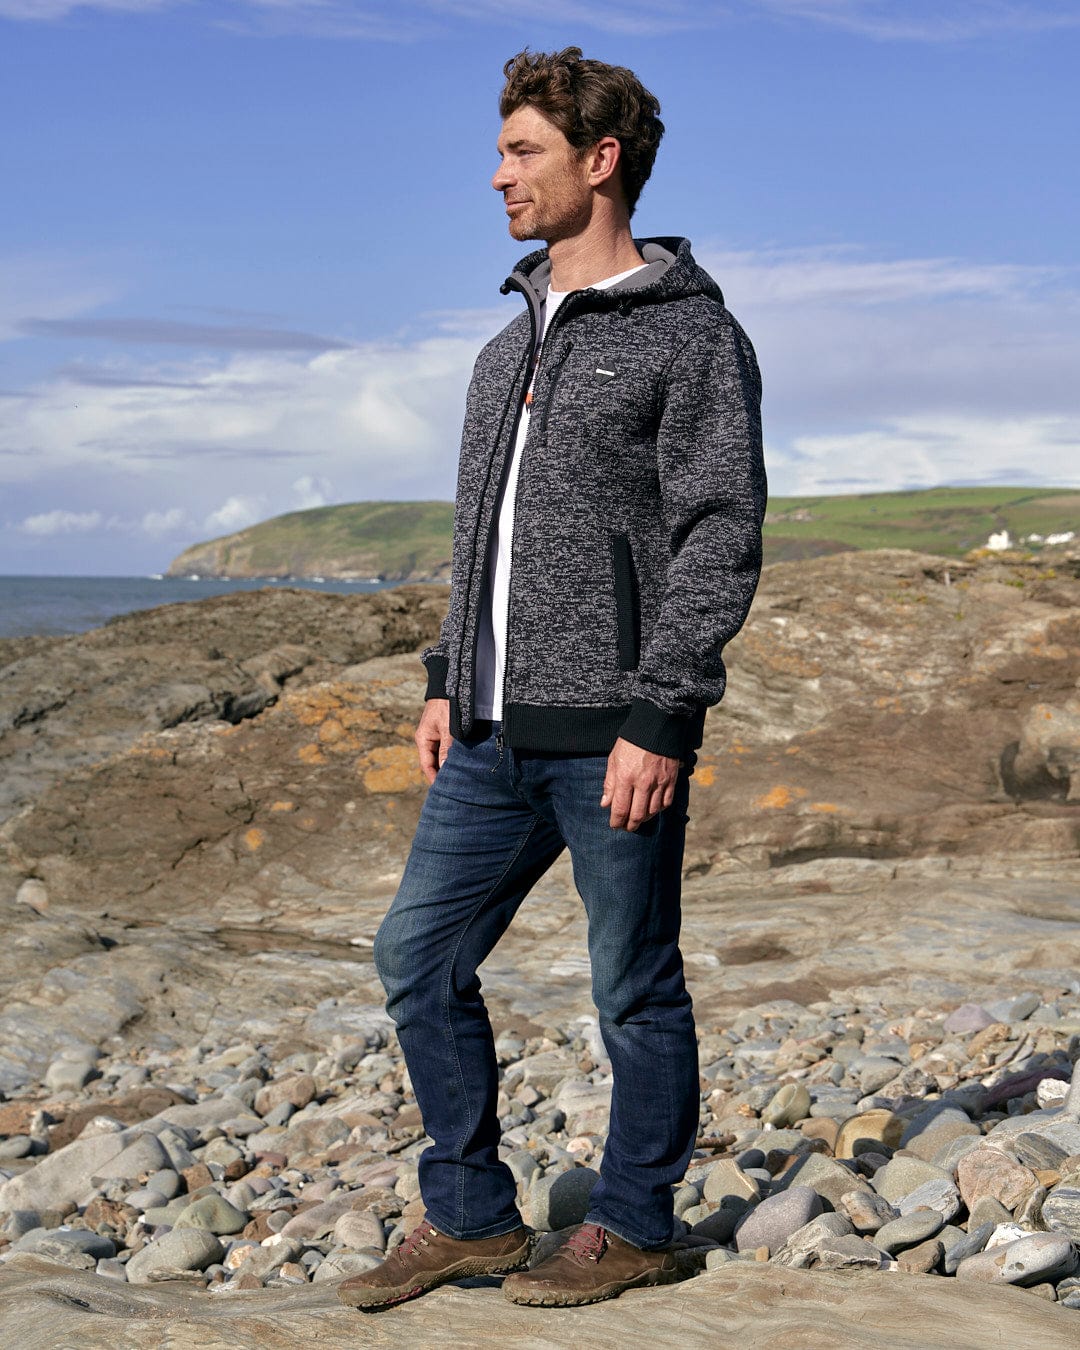 A man wearing a Saltrock Oskar - Mens Bonded Zip Hoodie - Grey standing on a rocky beach.